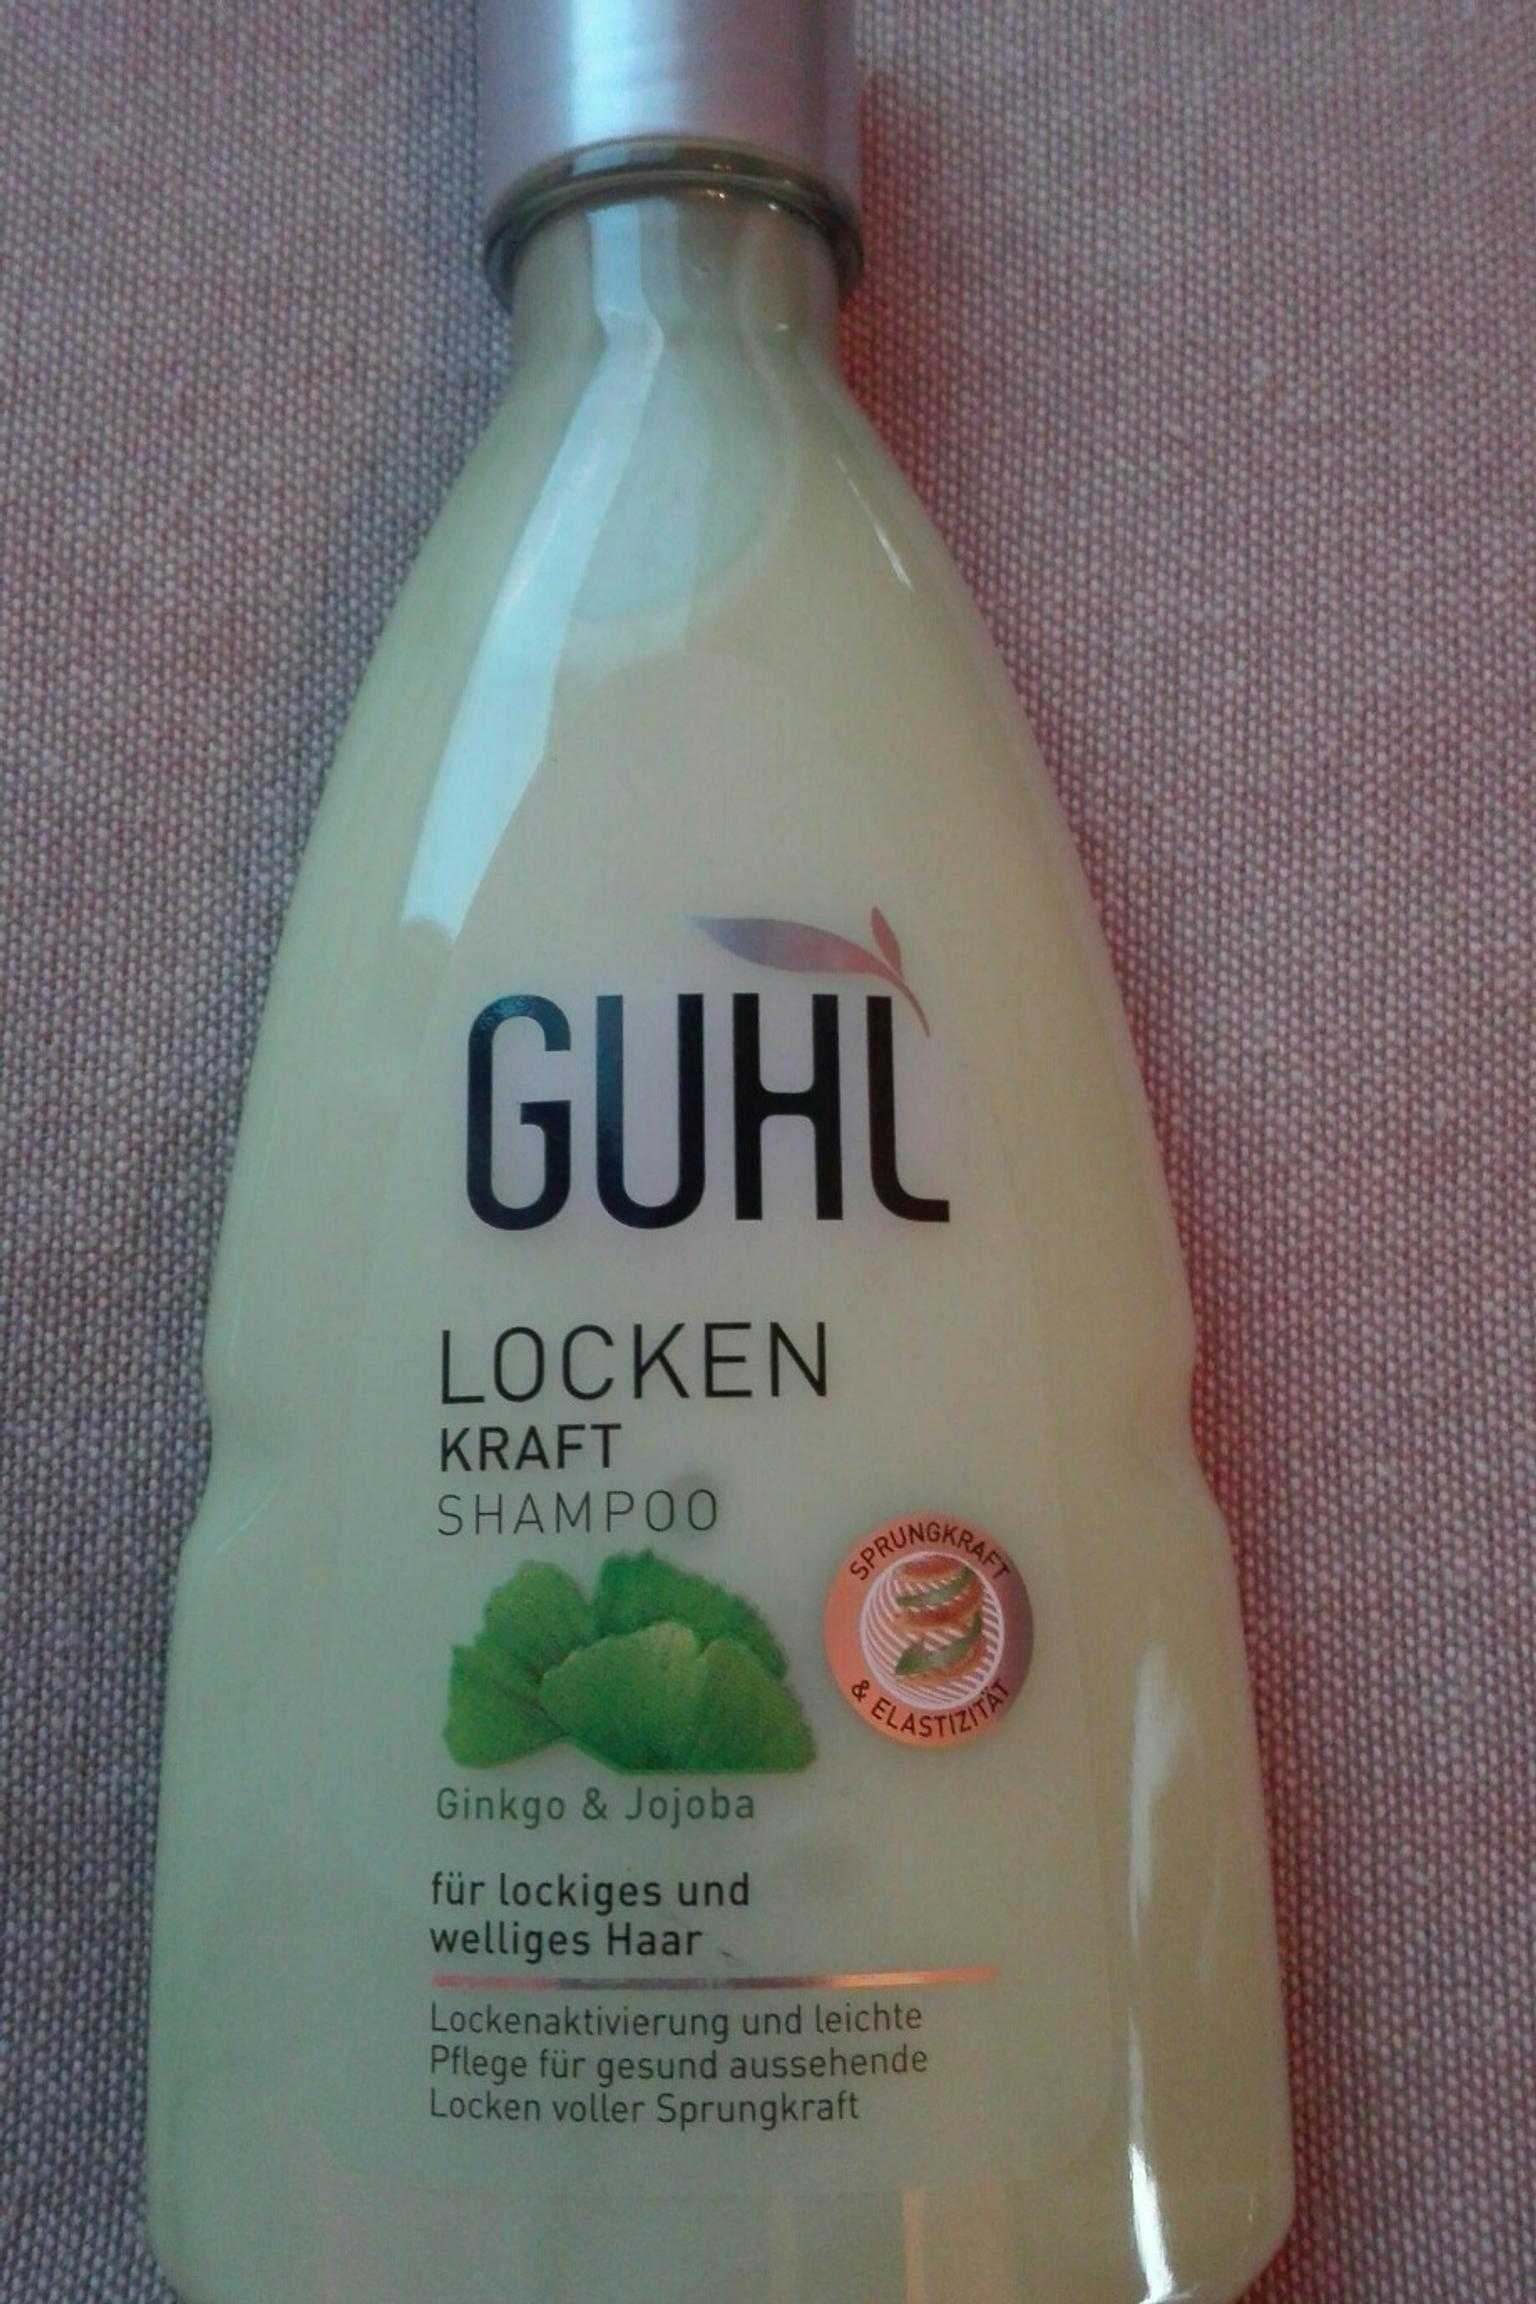 Guhl Locken Shampoo In Schifferstadt Fur 6 00 Zum Verkauf Shpock De